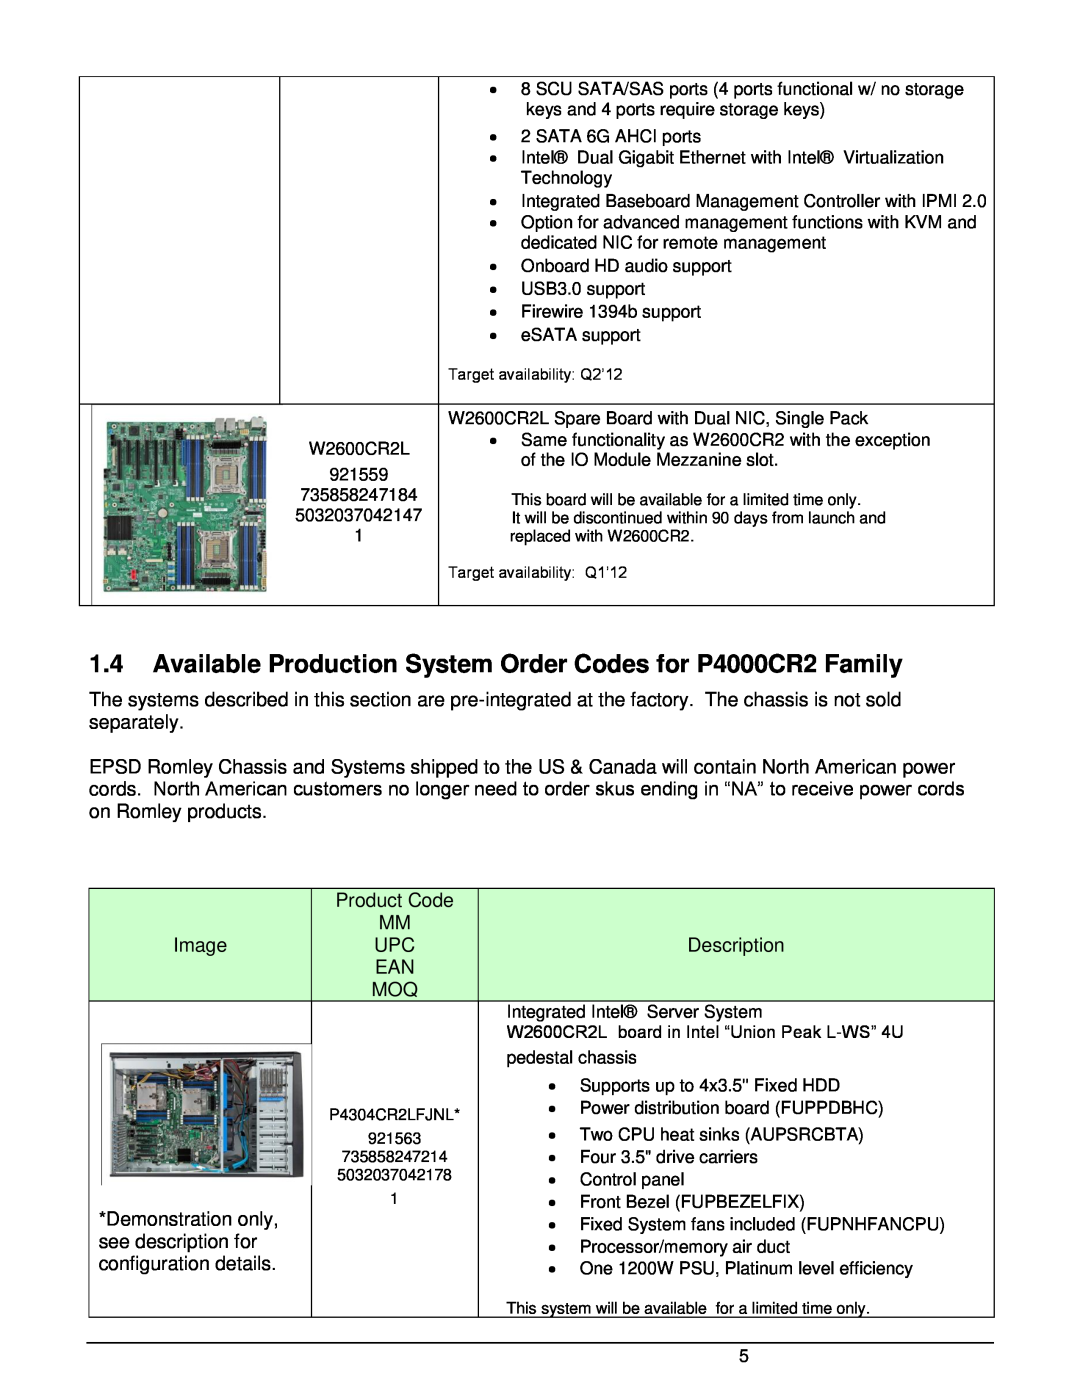 Intel W2600CR2 manual Product Code 